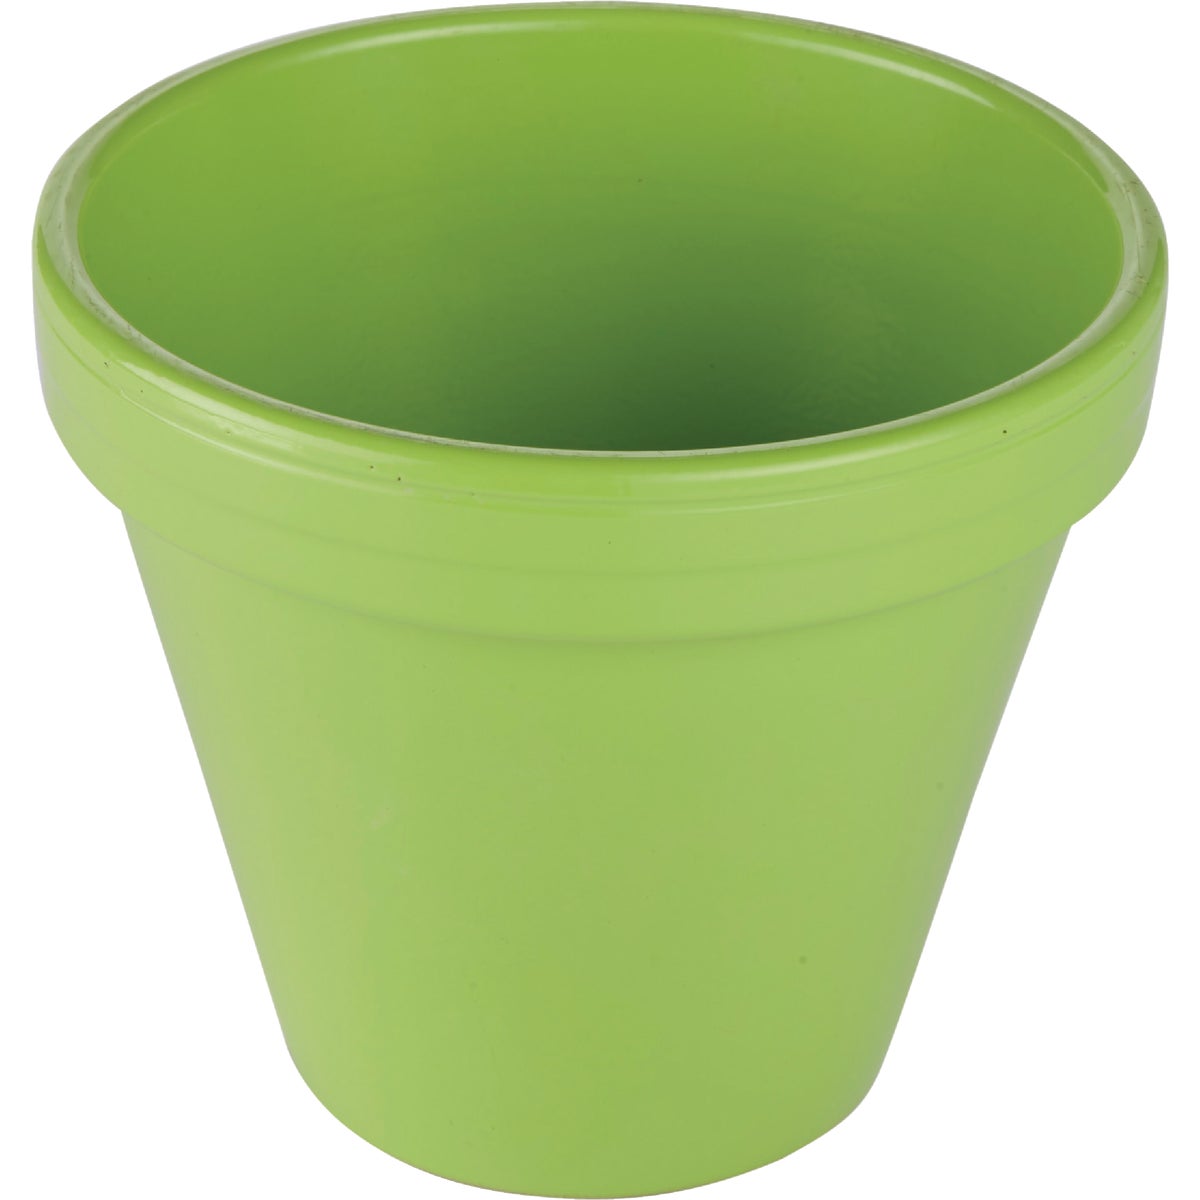 Ceramo Spring Fever 4-1/2 In. H. x 3-3/4 In. Dia Bright Green Clay Flower Pot